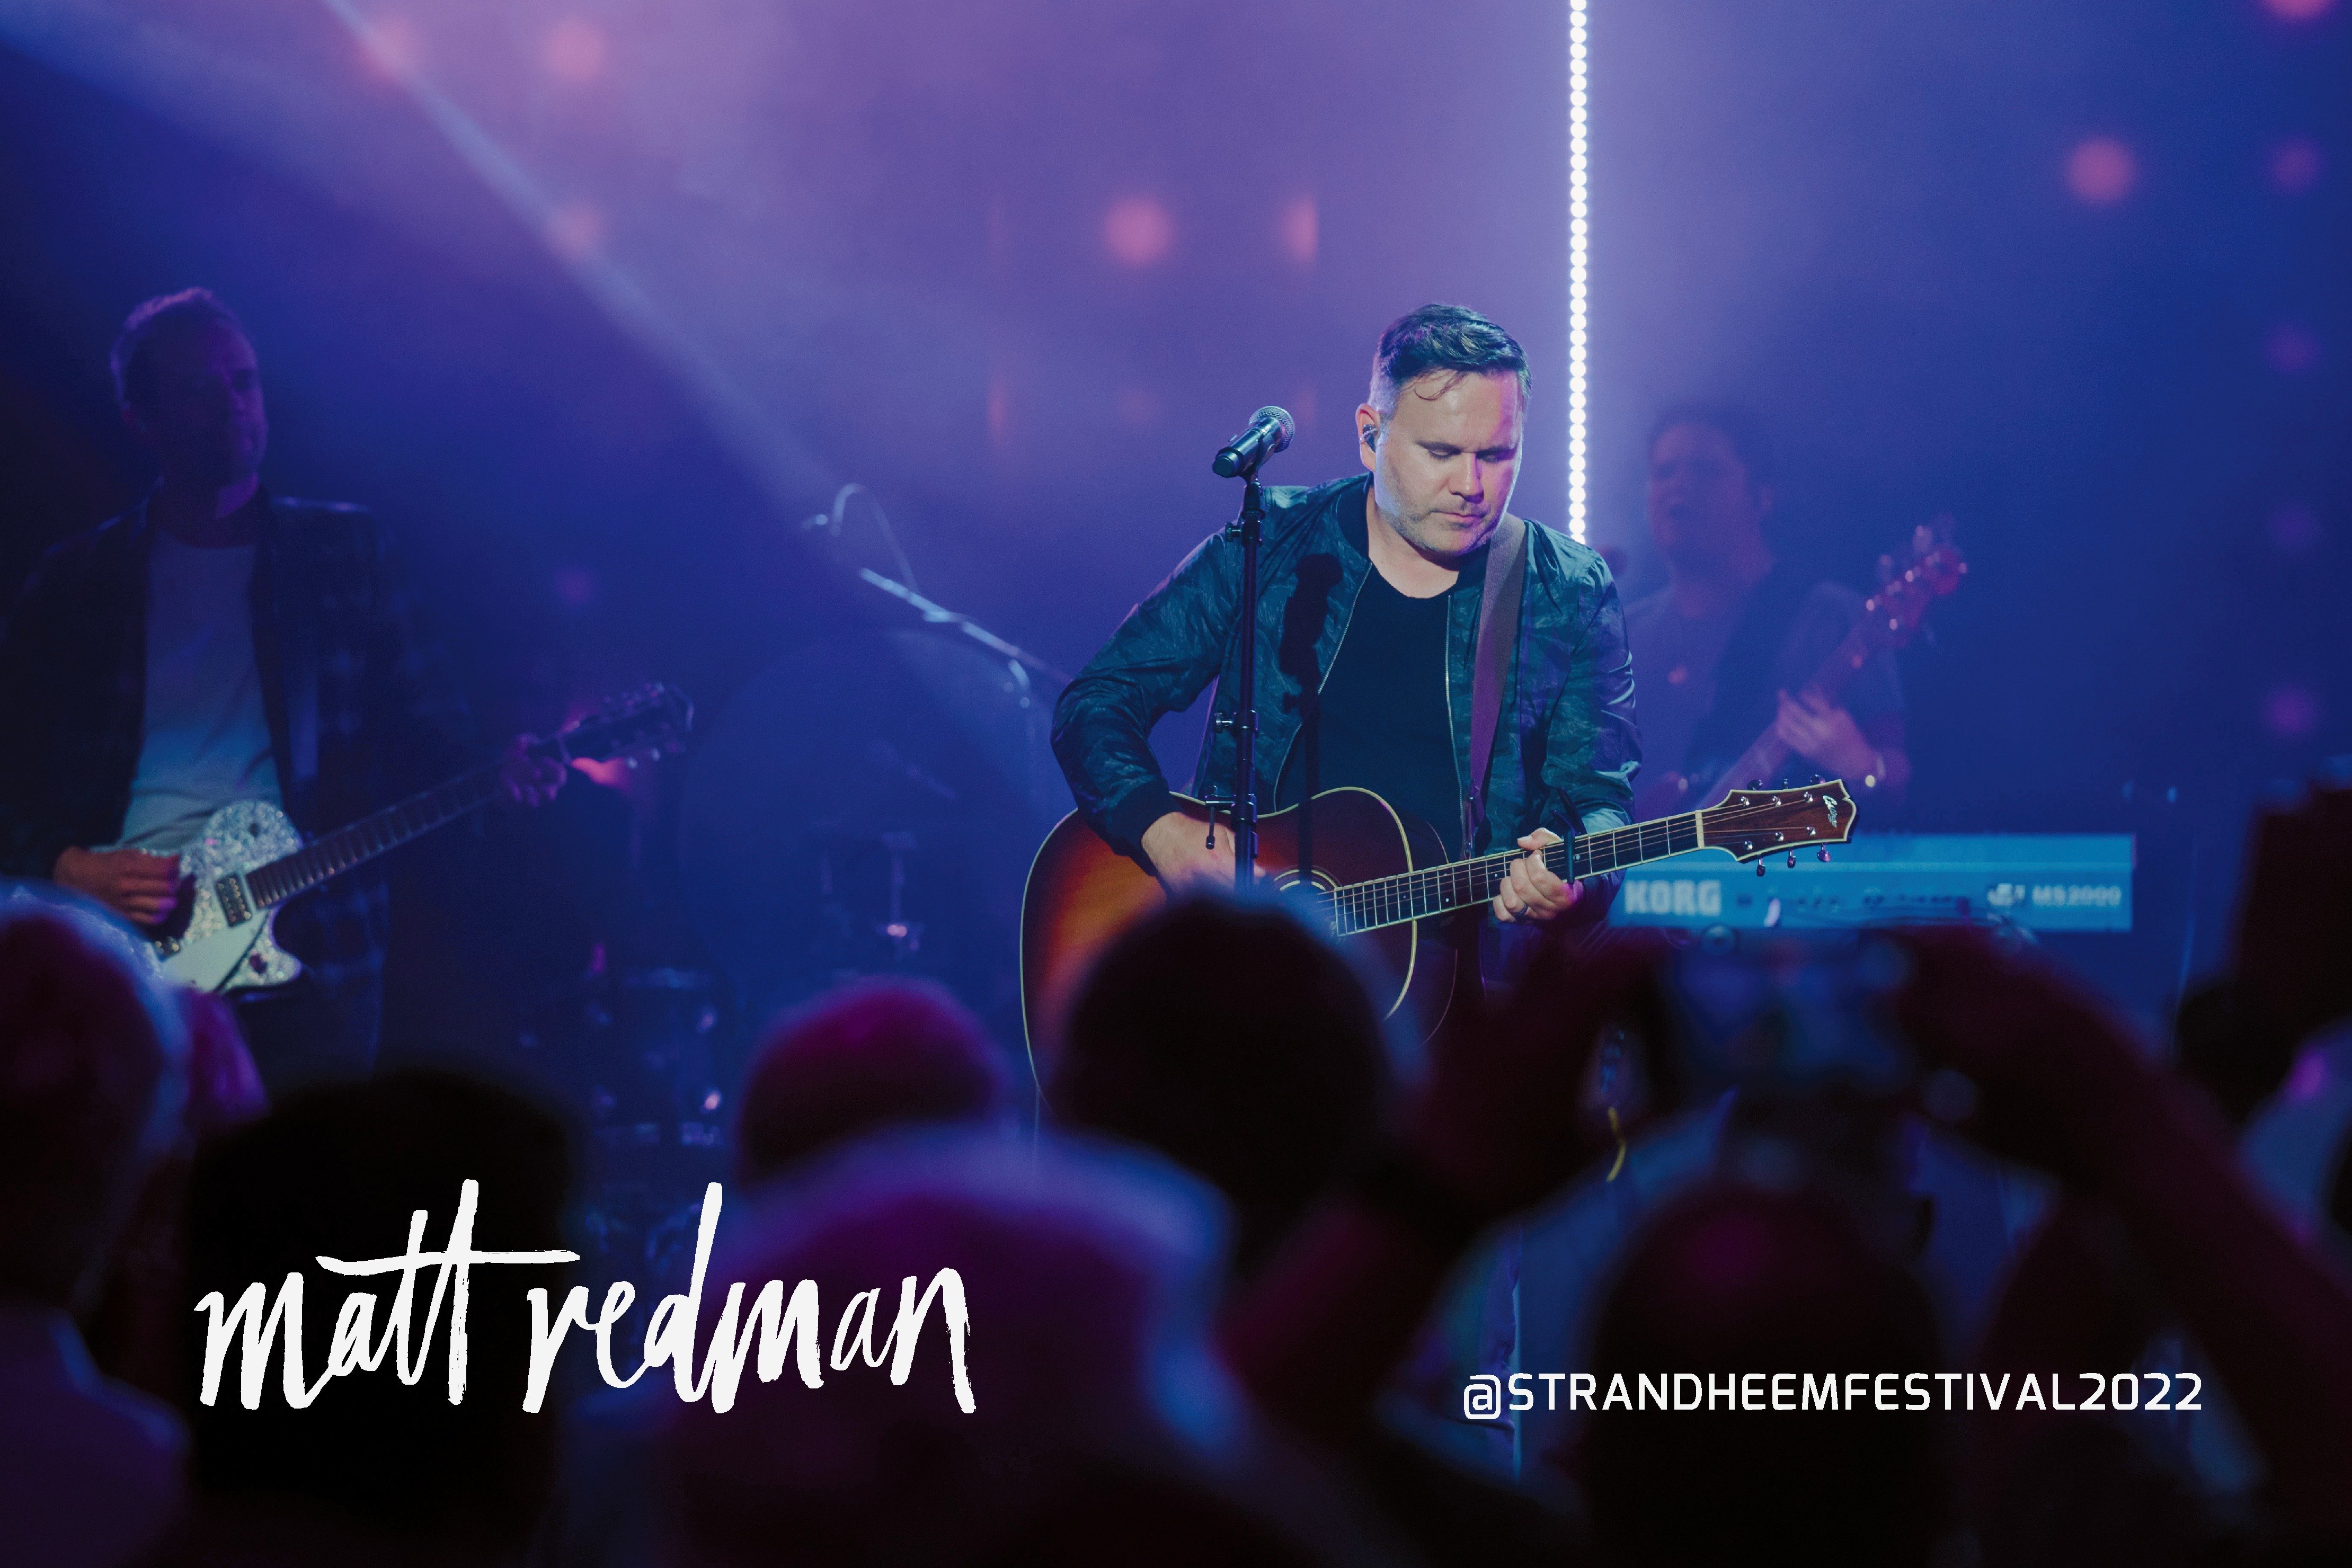 Strandheem Festival Openingsconcert met Matt Redman en LEV